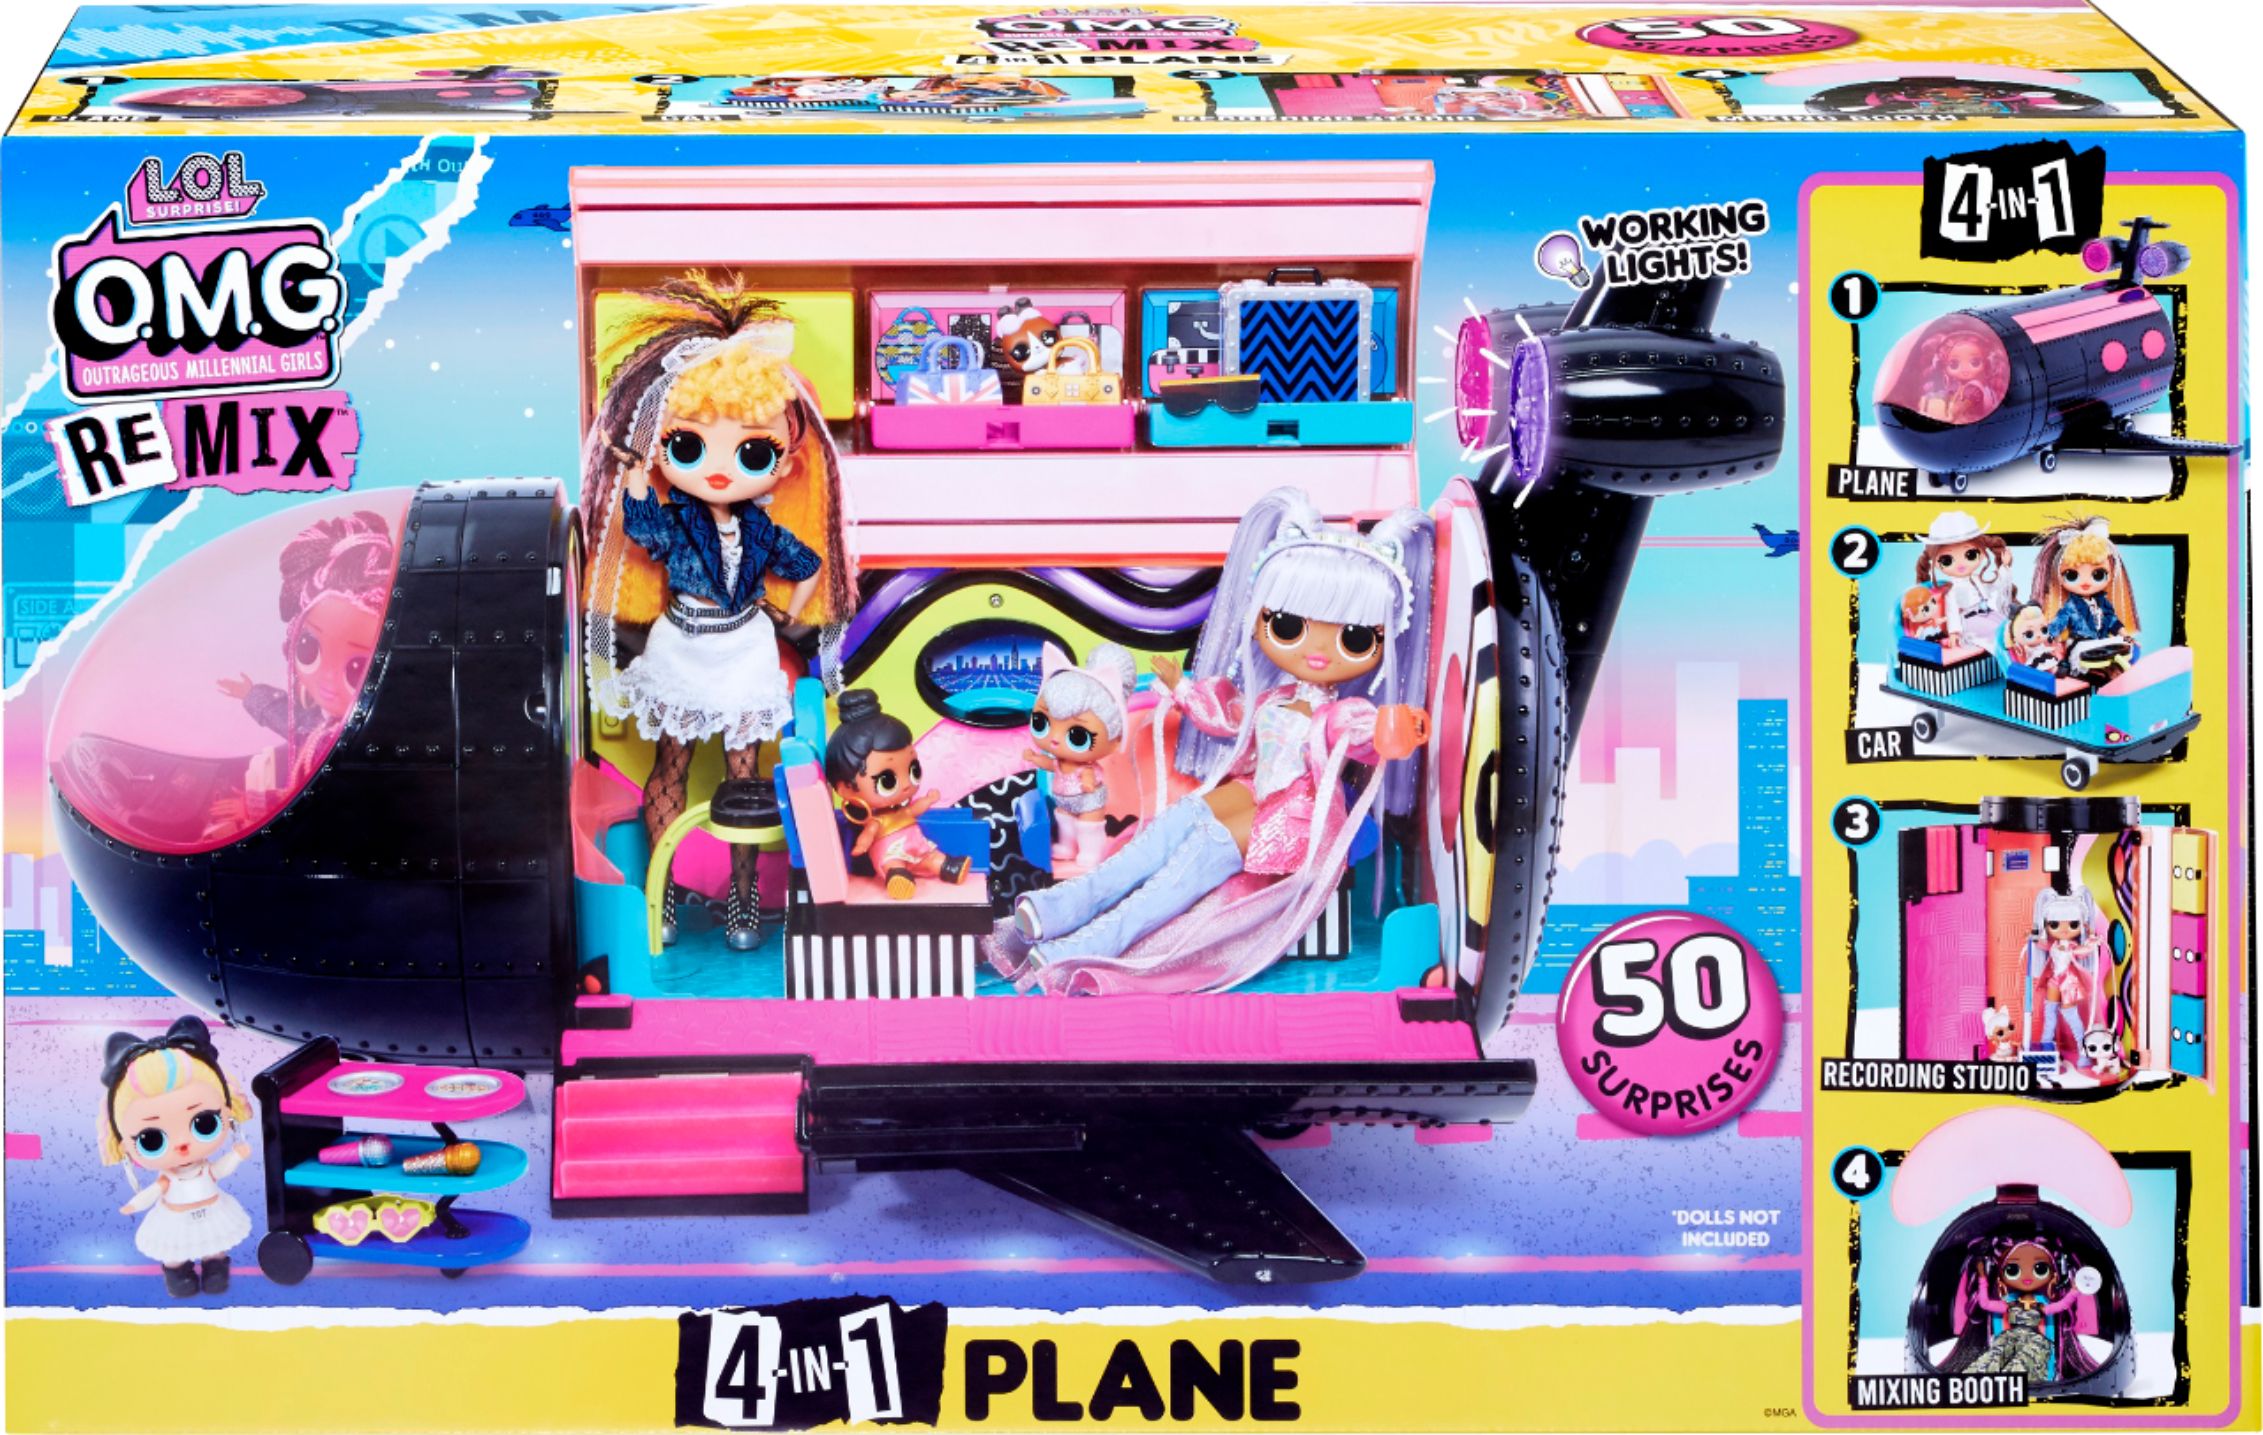 L.O.L. Surprise! O.M.G. Remix 4-in-1 Plane Playset Transforms – 50 Surprises